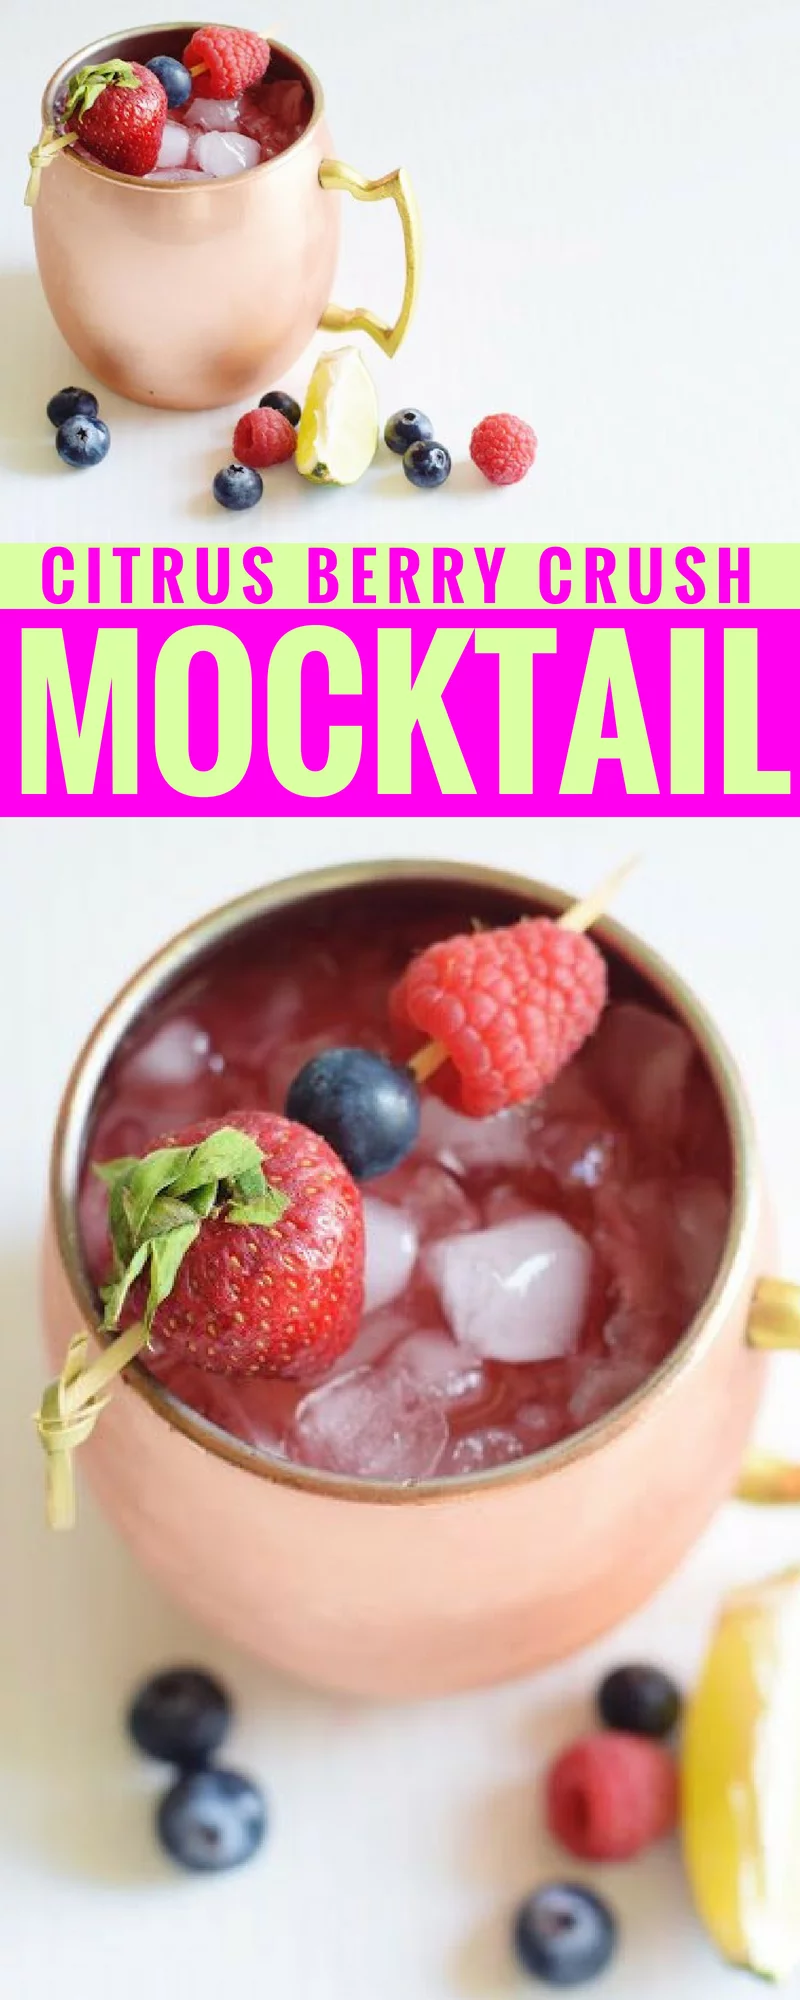 Citrus Berry Crush Mocktail - Mocktail Recipe - Mocktail Recipe Ideas - Easy Mocktail - Cocktail Ideas - La Croix - Summer Mocktail - Summer Cocktails - Berry Cocktails - Copper Mug Recipes - Communikait by Kait Hanson